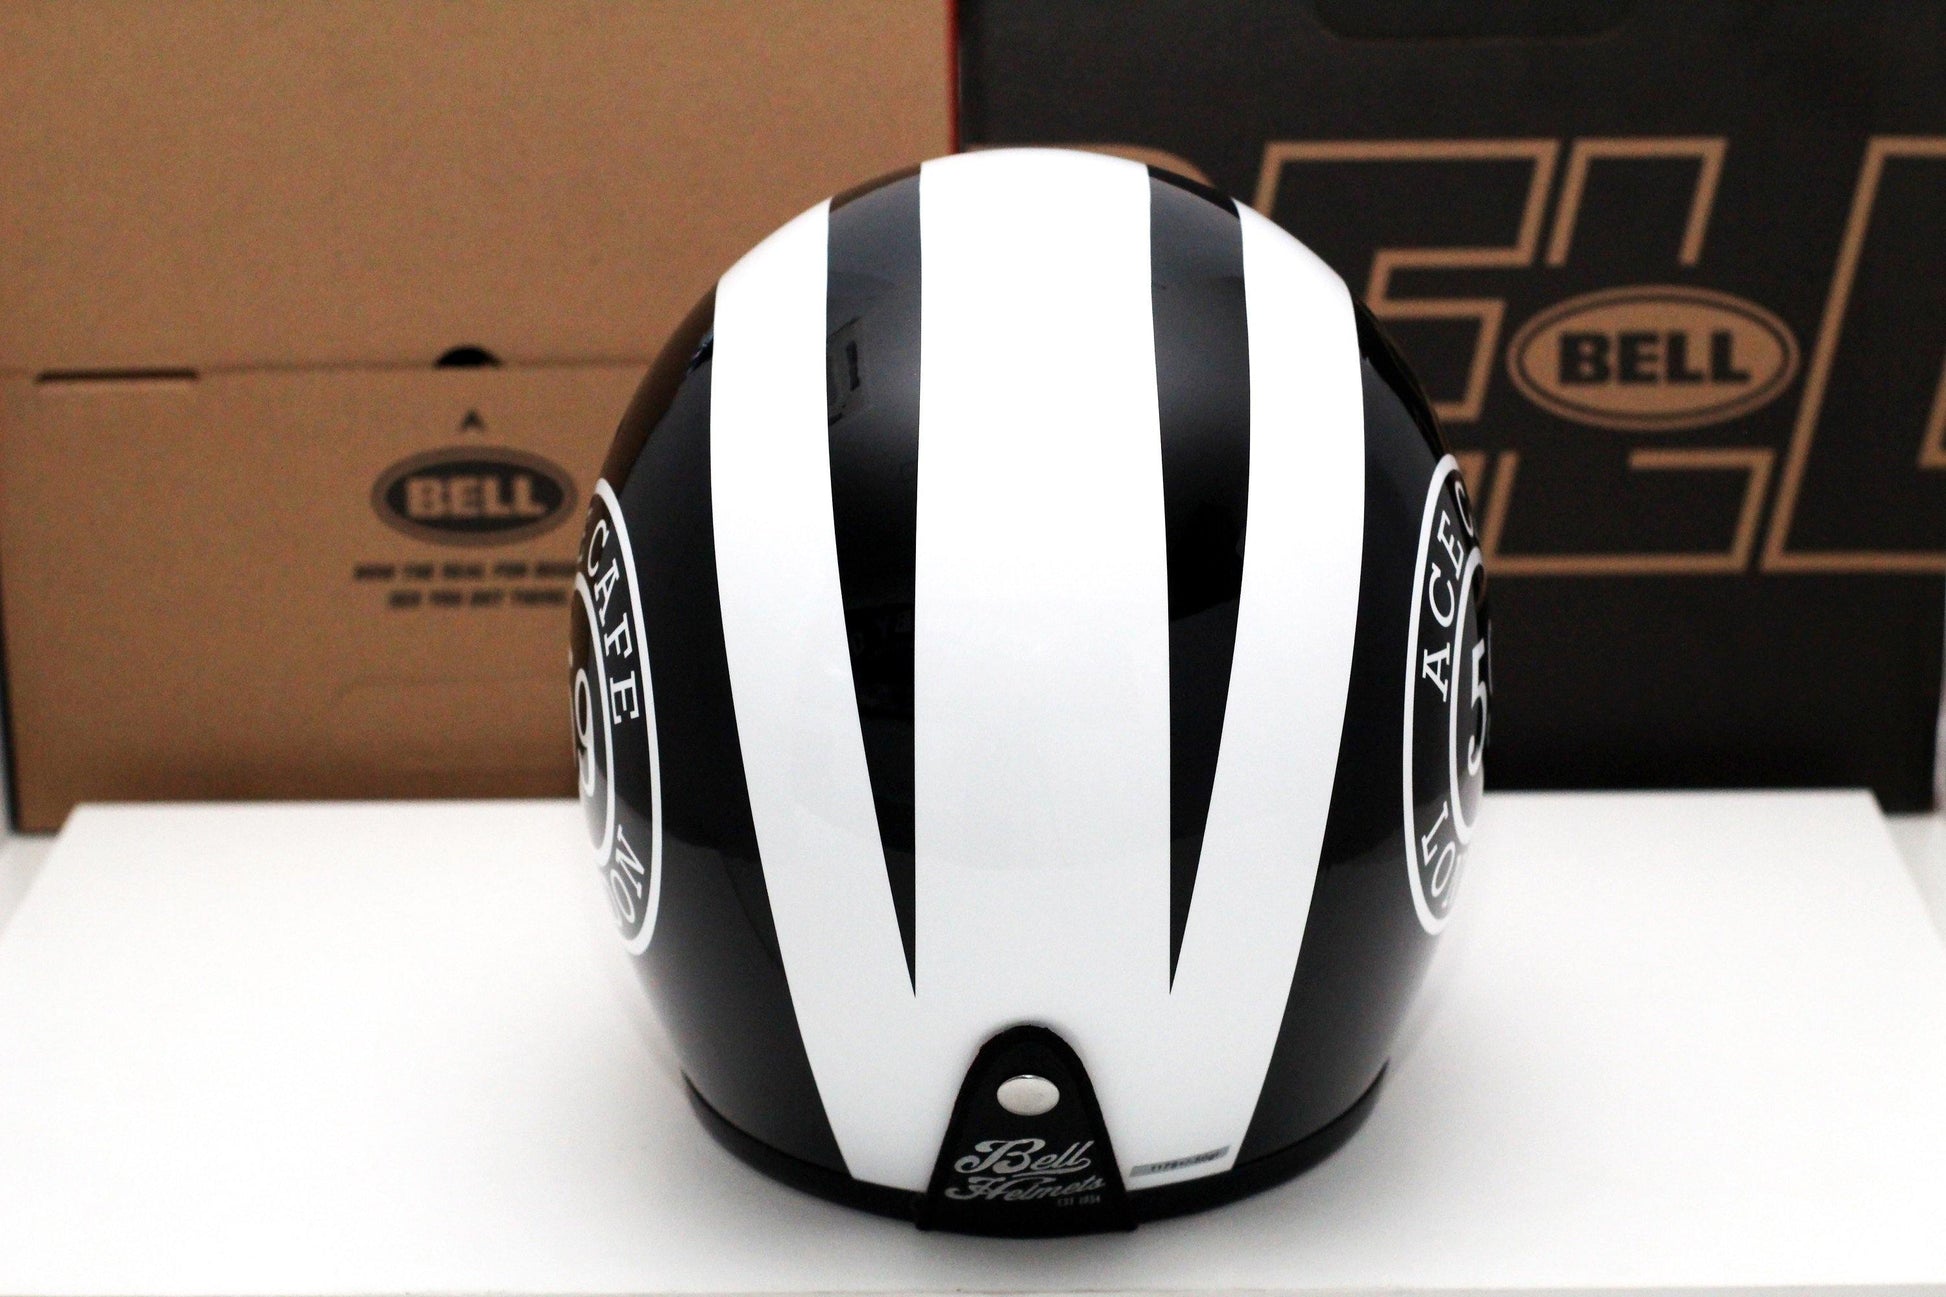 Bell Custom 500 (Ace Cafe 59 Black/White) - Durian Bikers